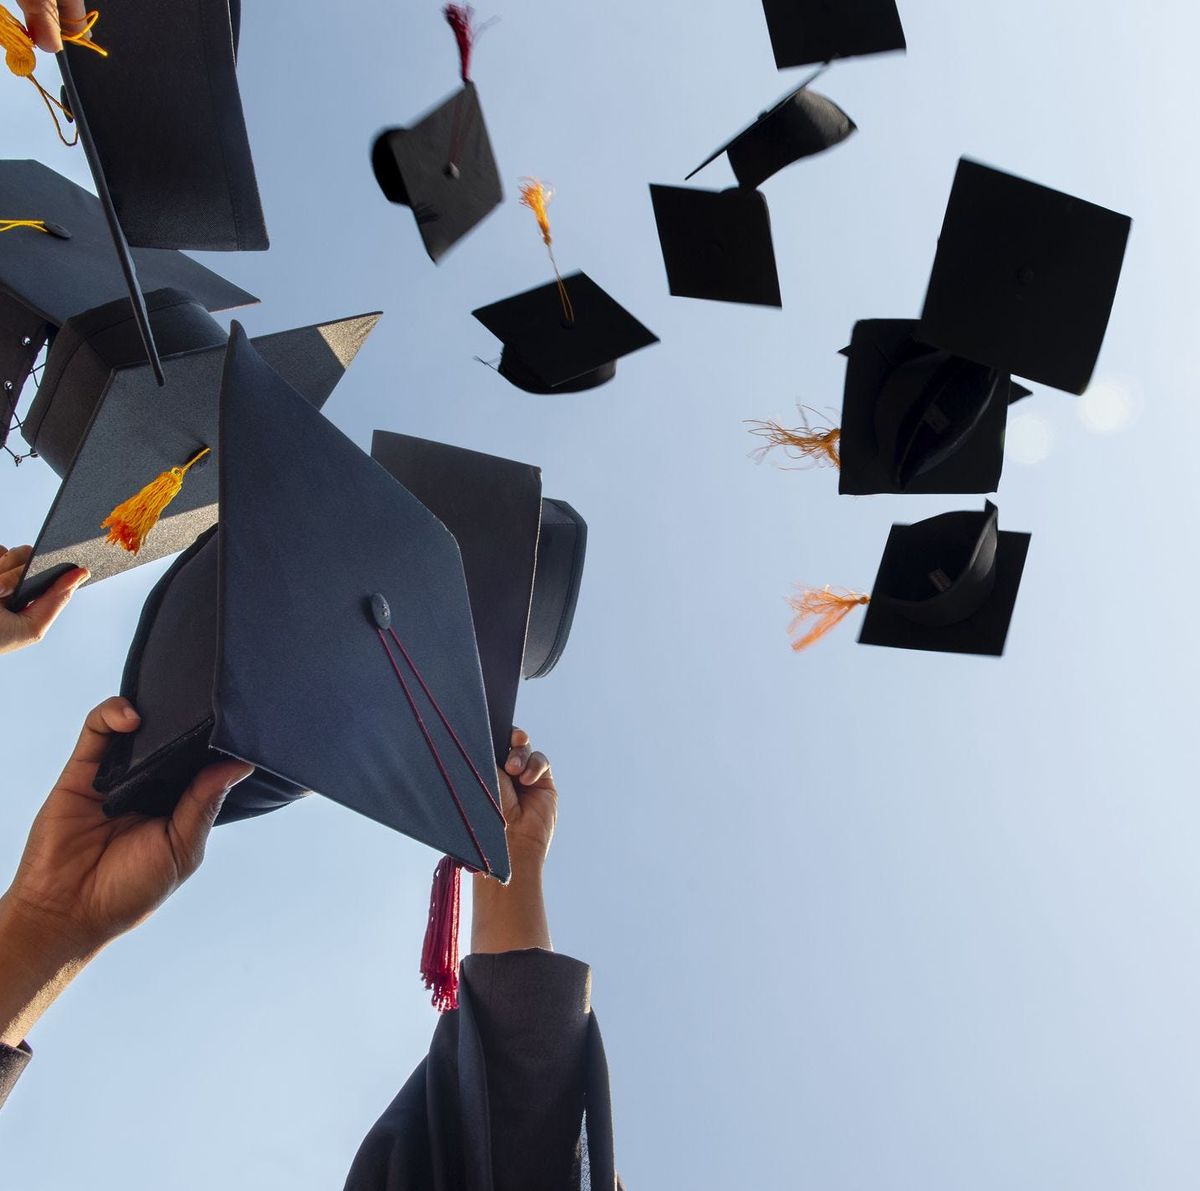 50 Best Graduation Quotes - Inspirational Graduation Sayings